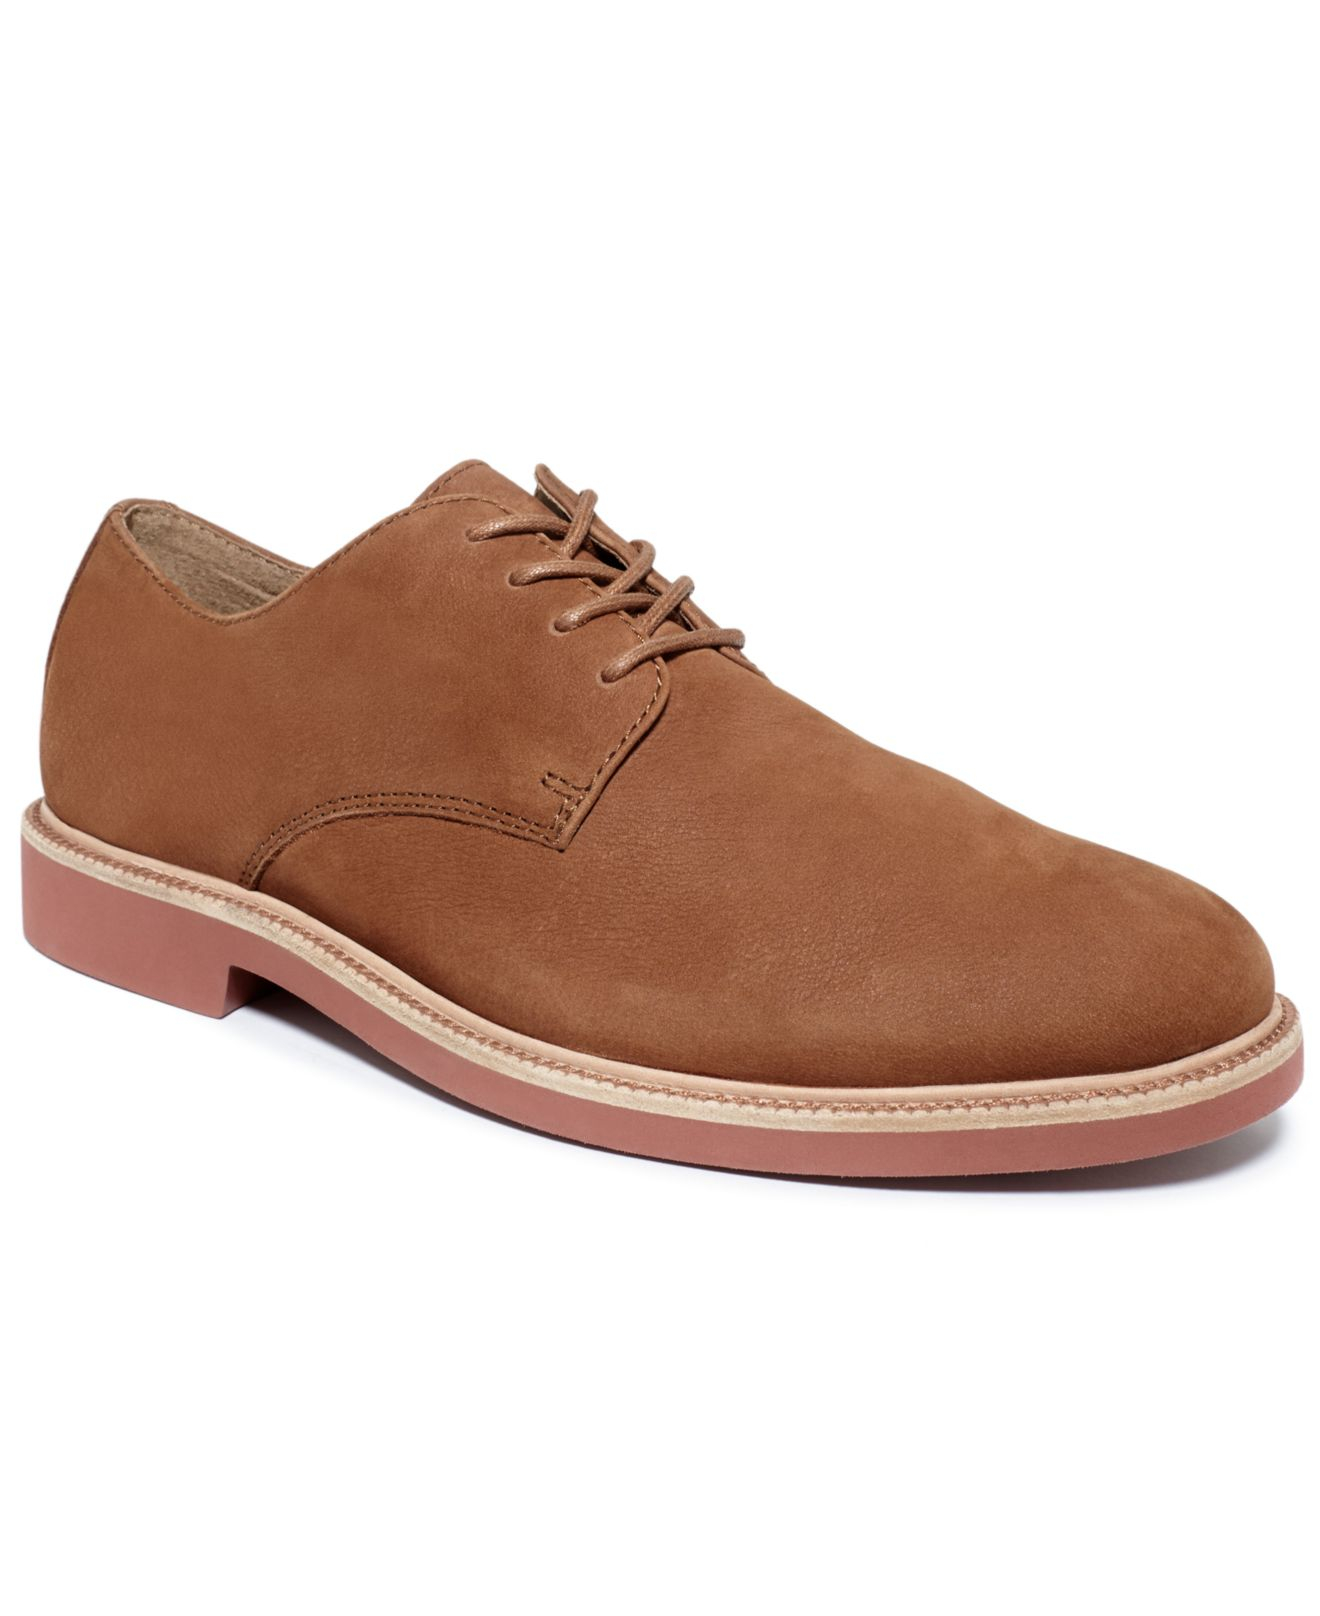 Lyst - Polo Ralph Lauren Torrington Dress Shoes in Brown for Men